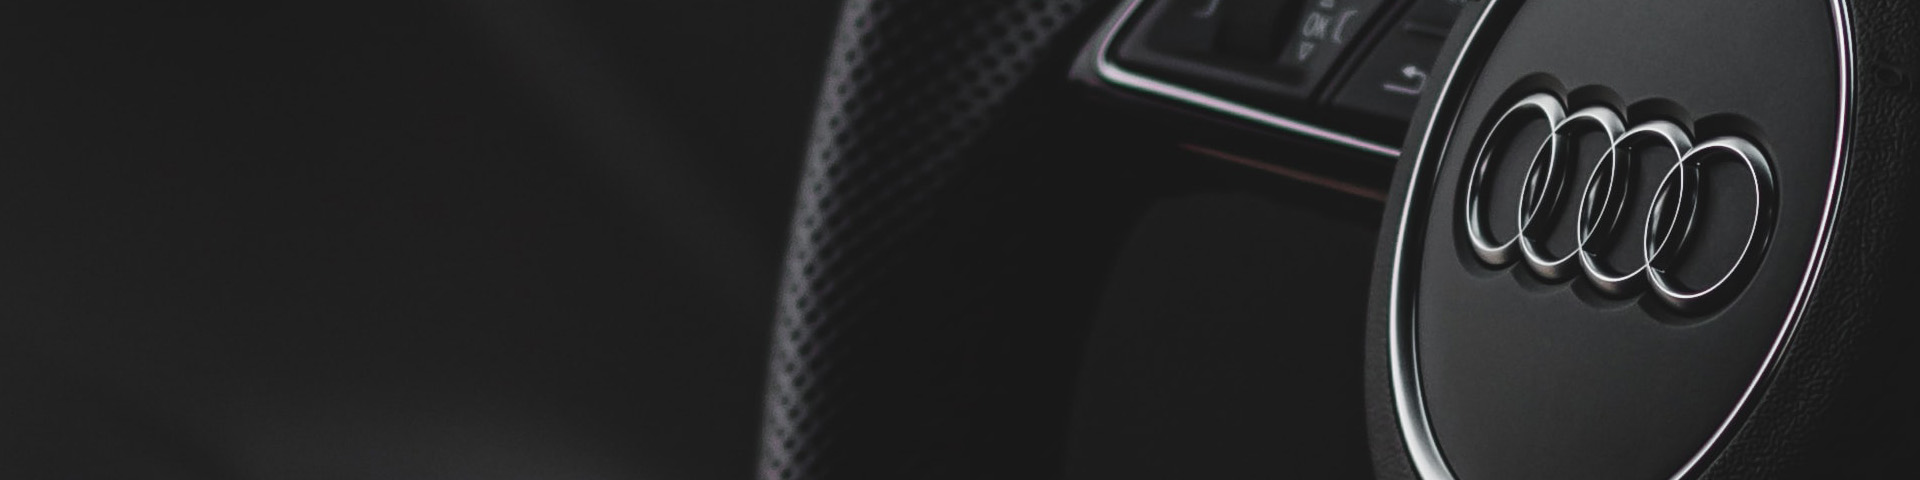 Audi R8 Backdrop